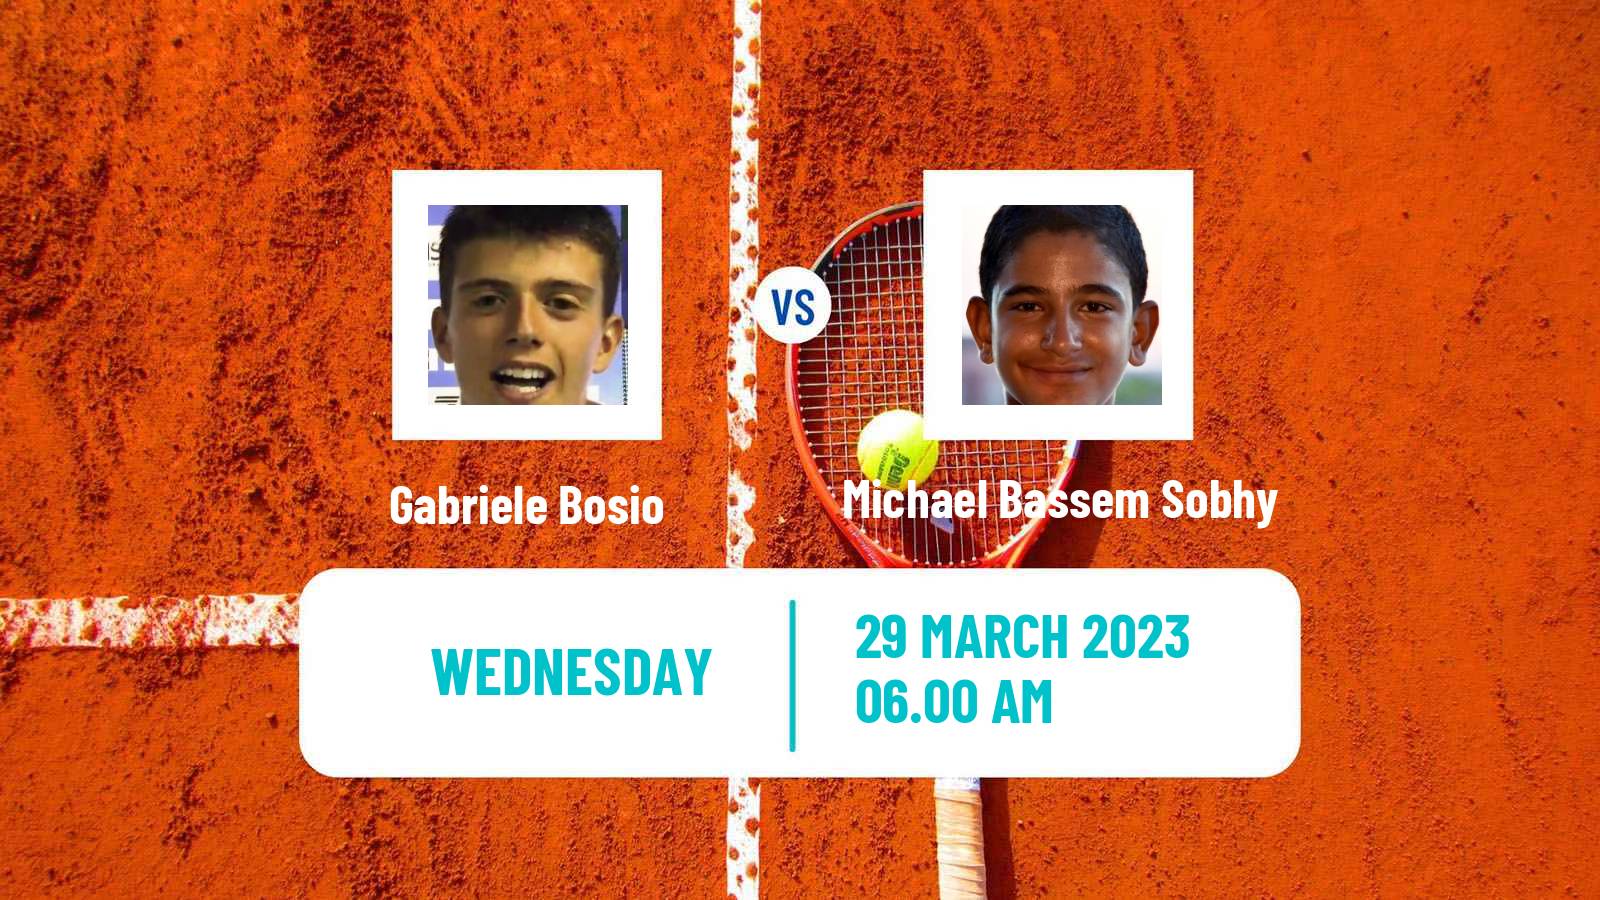 Tennis ITF Tournaments Gabriele Bosio - Michael Bassem Sobhy